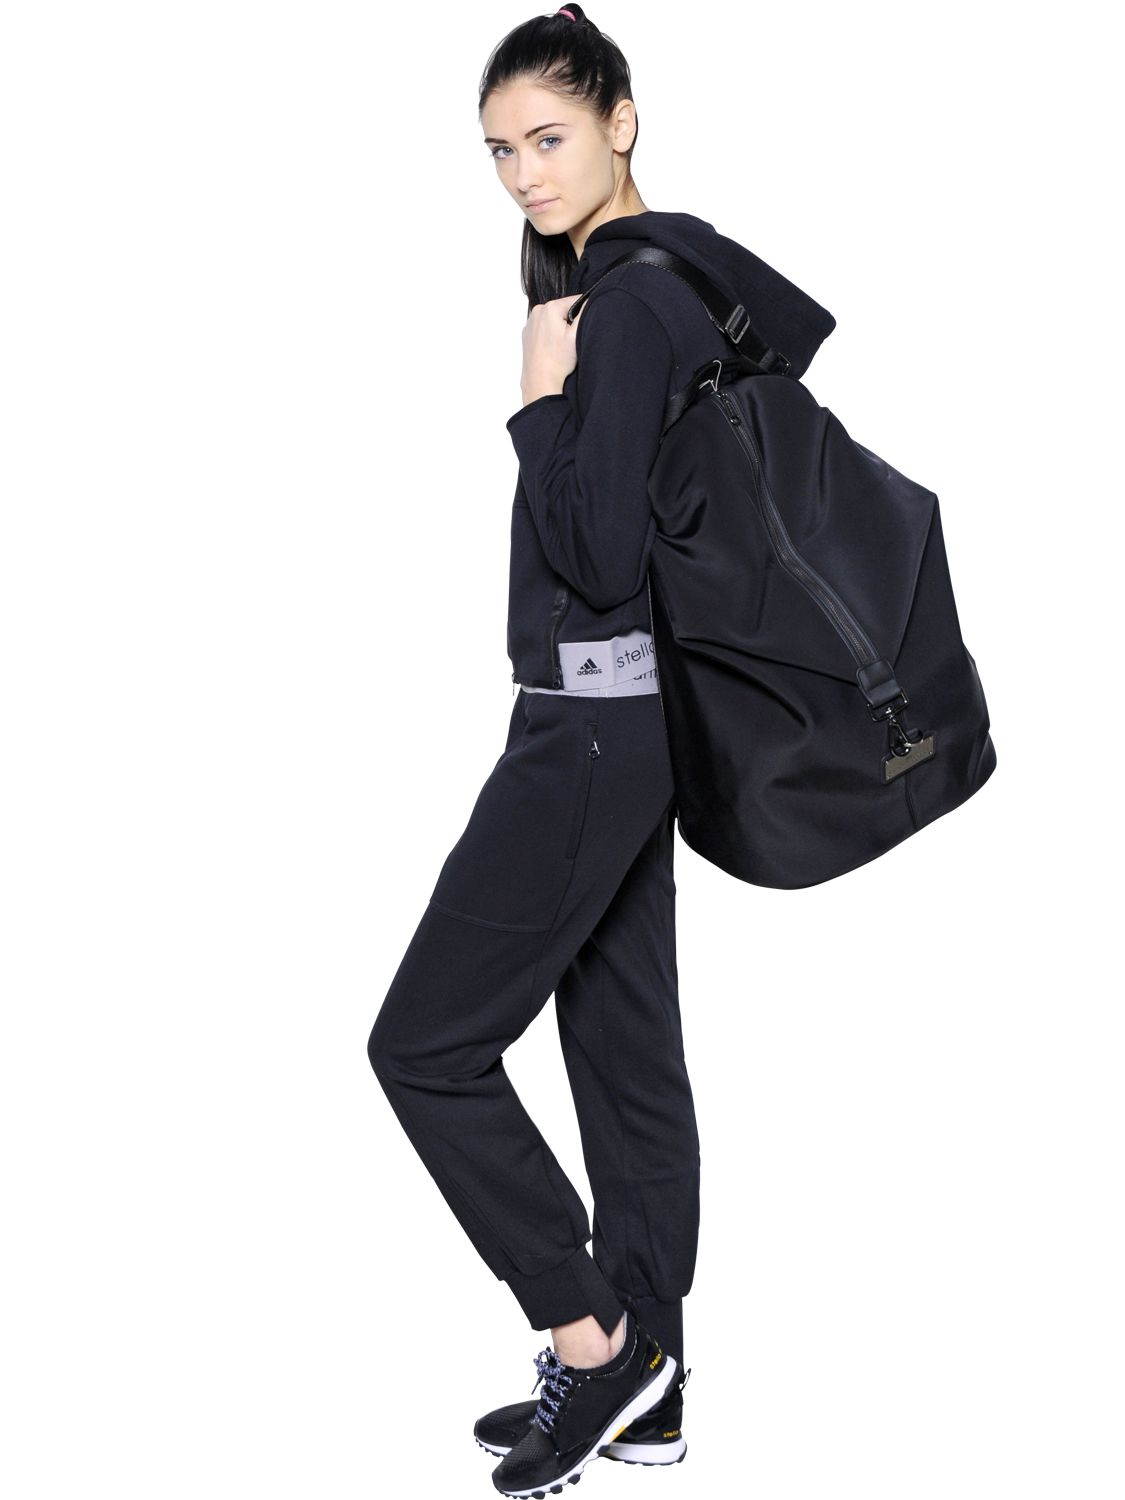 stella mccartney adidas backpack sale